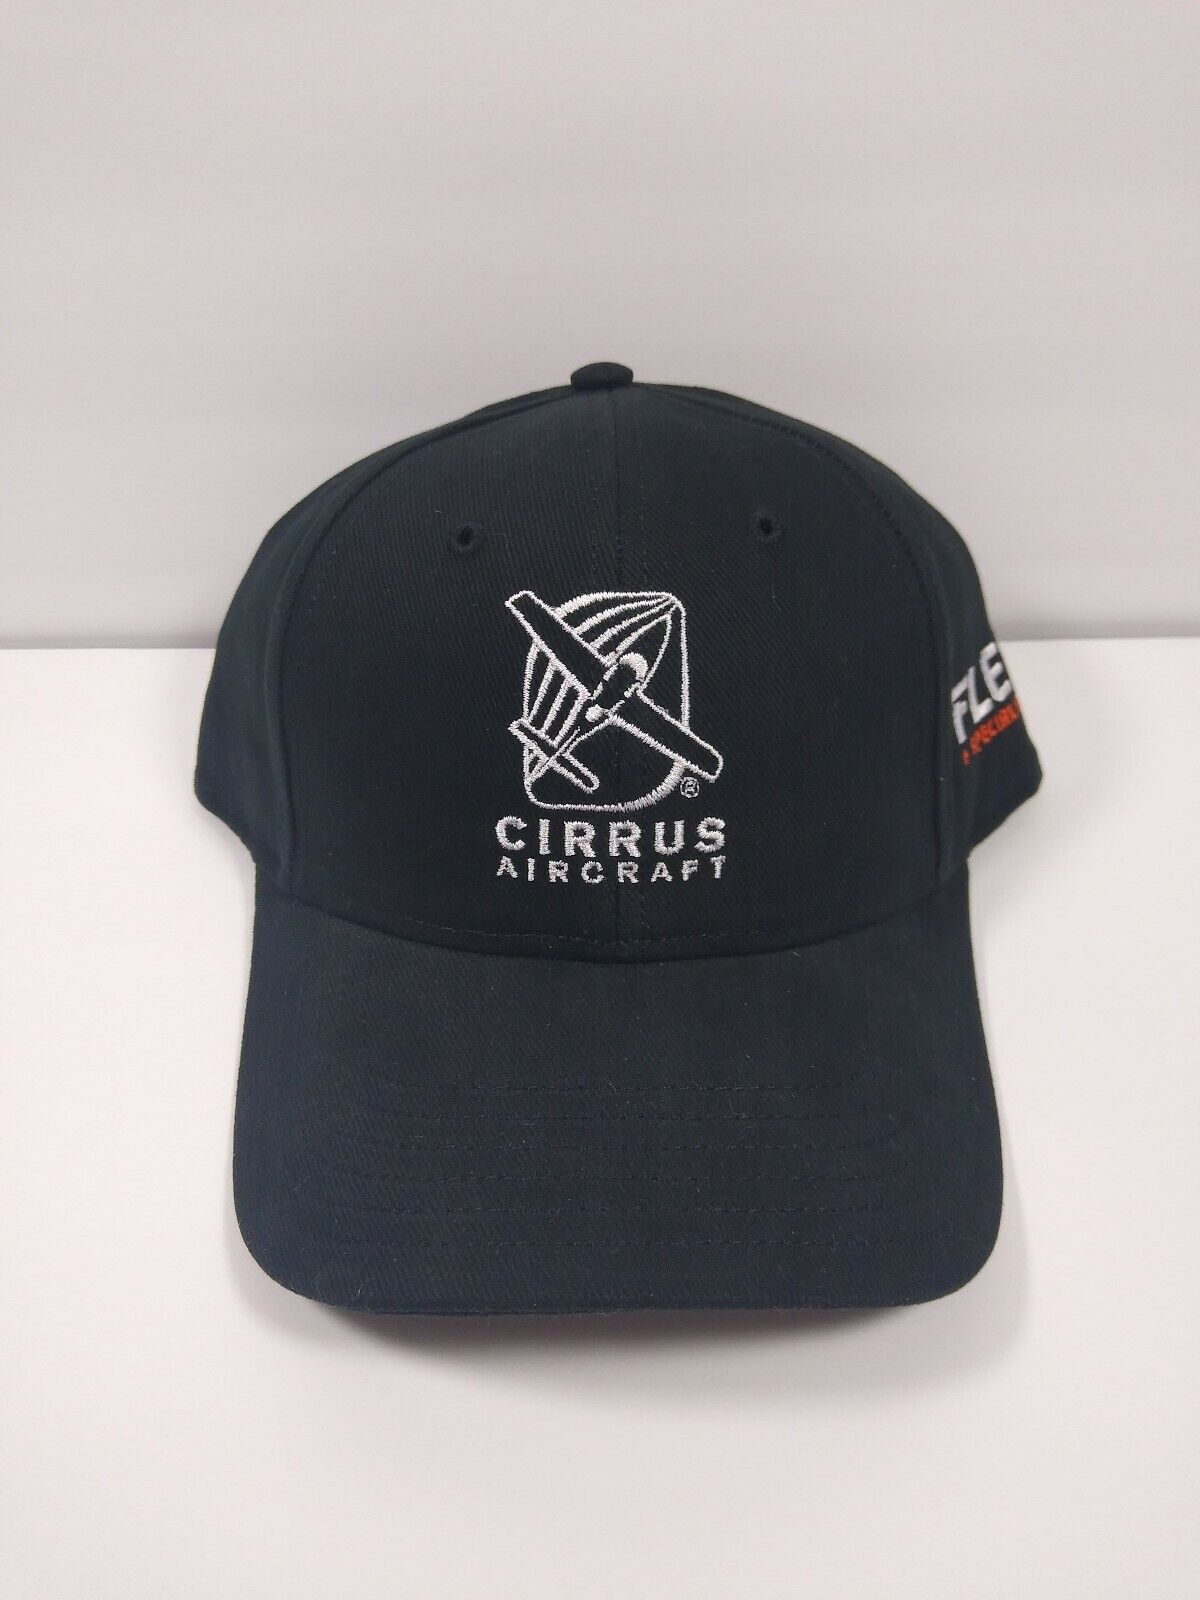 Cirrus Aircraft Black Ball Cap Hat Adjustable